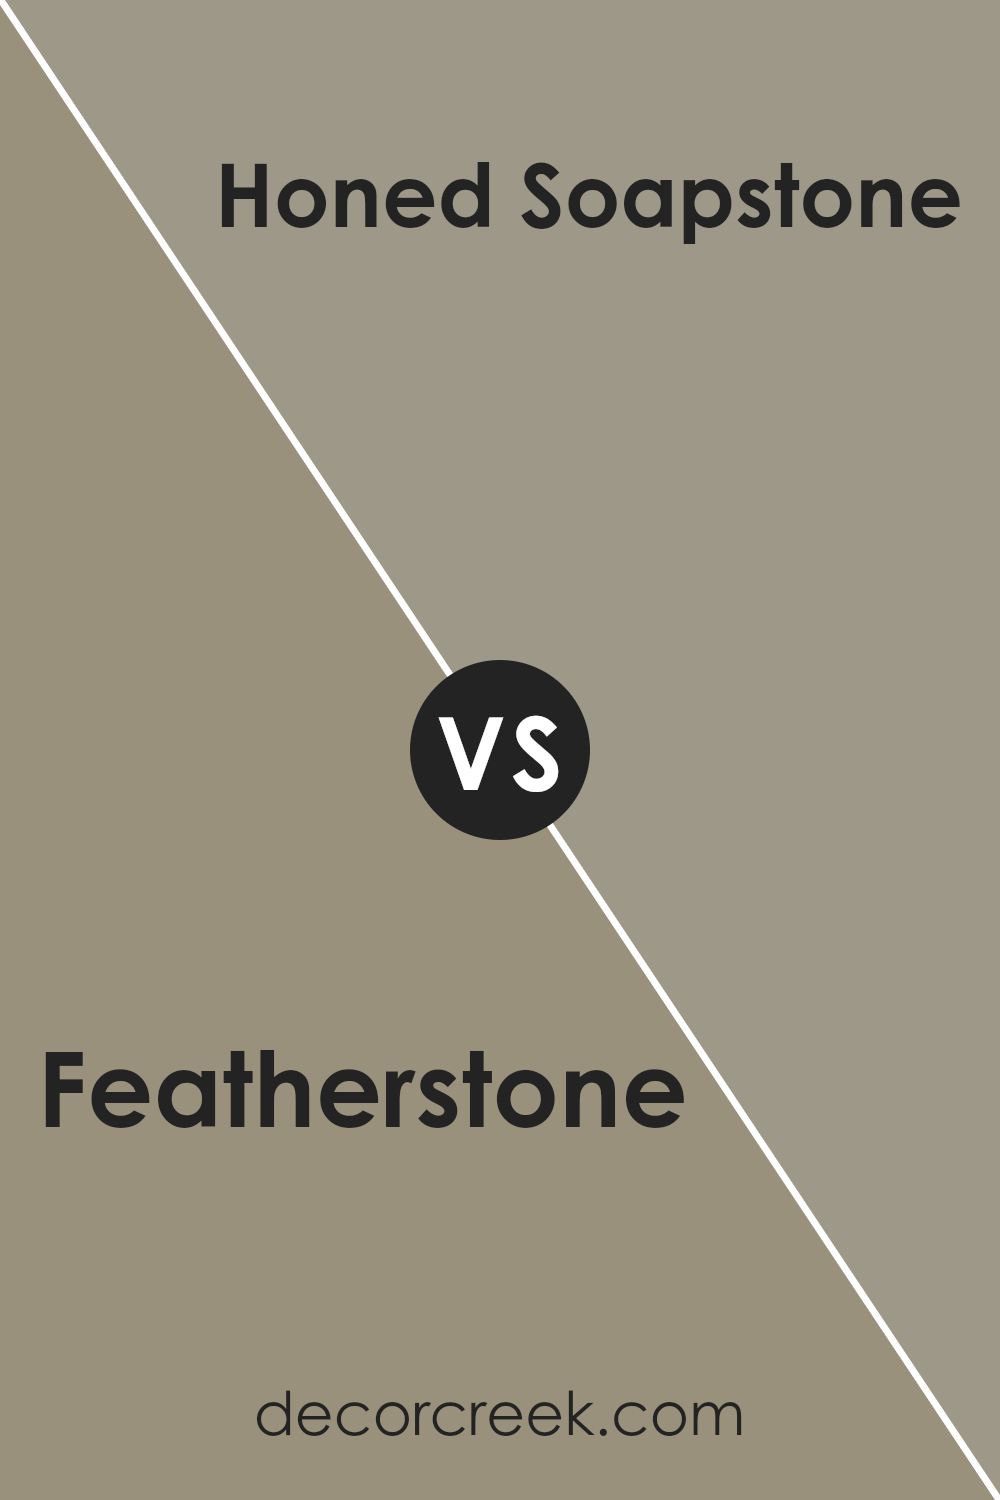 featherstone_sw_9518_vs_honed_soapstone_sw_9126